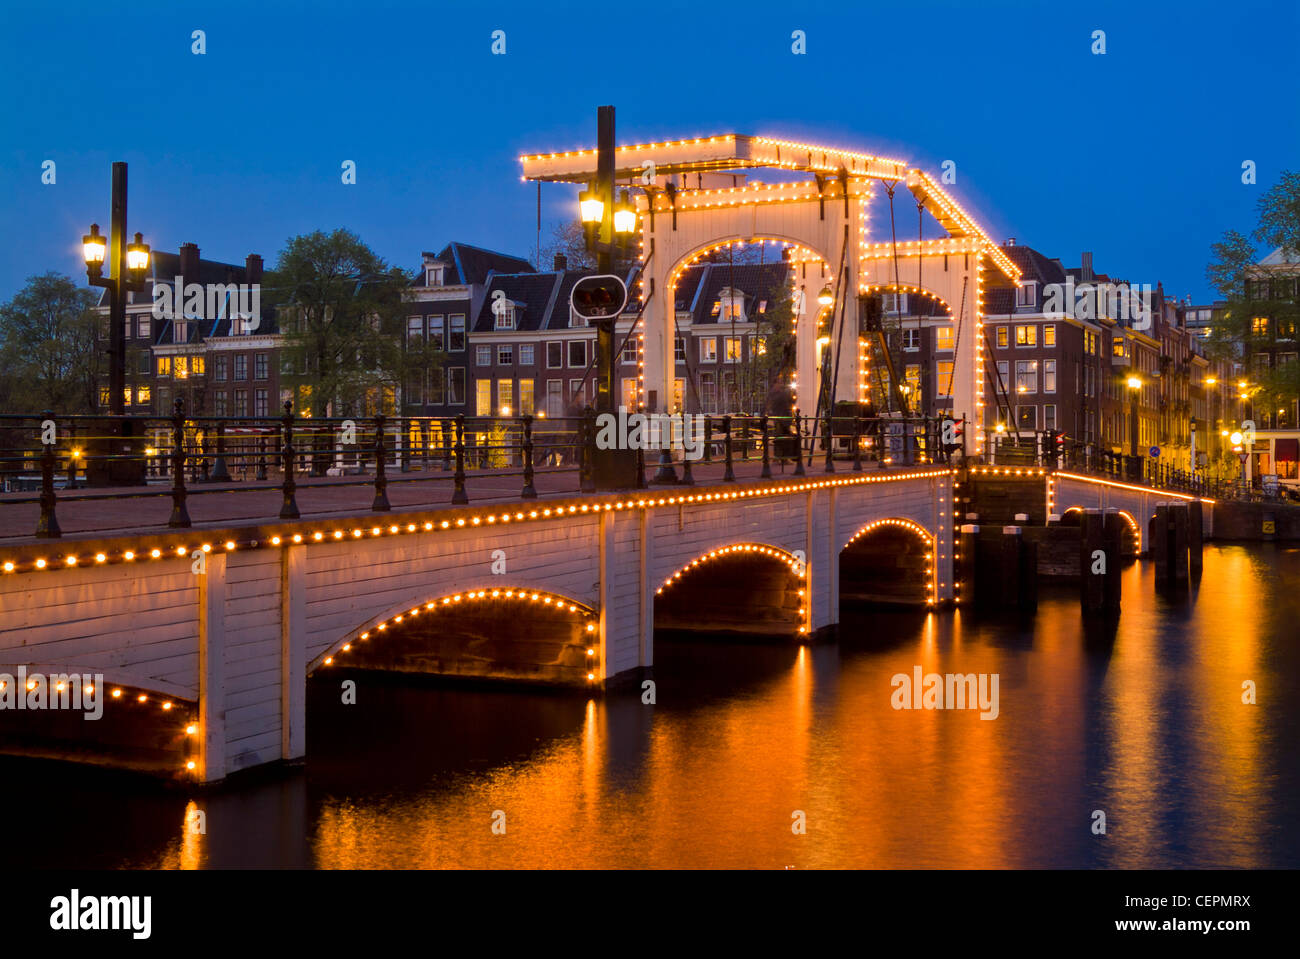 Magere Brug oder "Magere Brücke" bei Nacht doppelte Zugbrücke überspannt den Fluss Amstel Amsterdam Niederlande Holland EU Europa Stockfoto